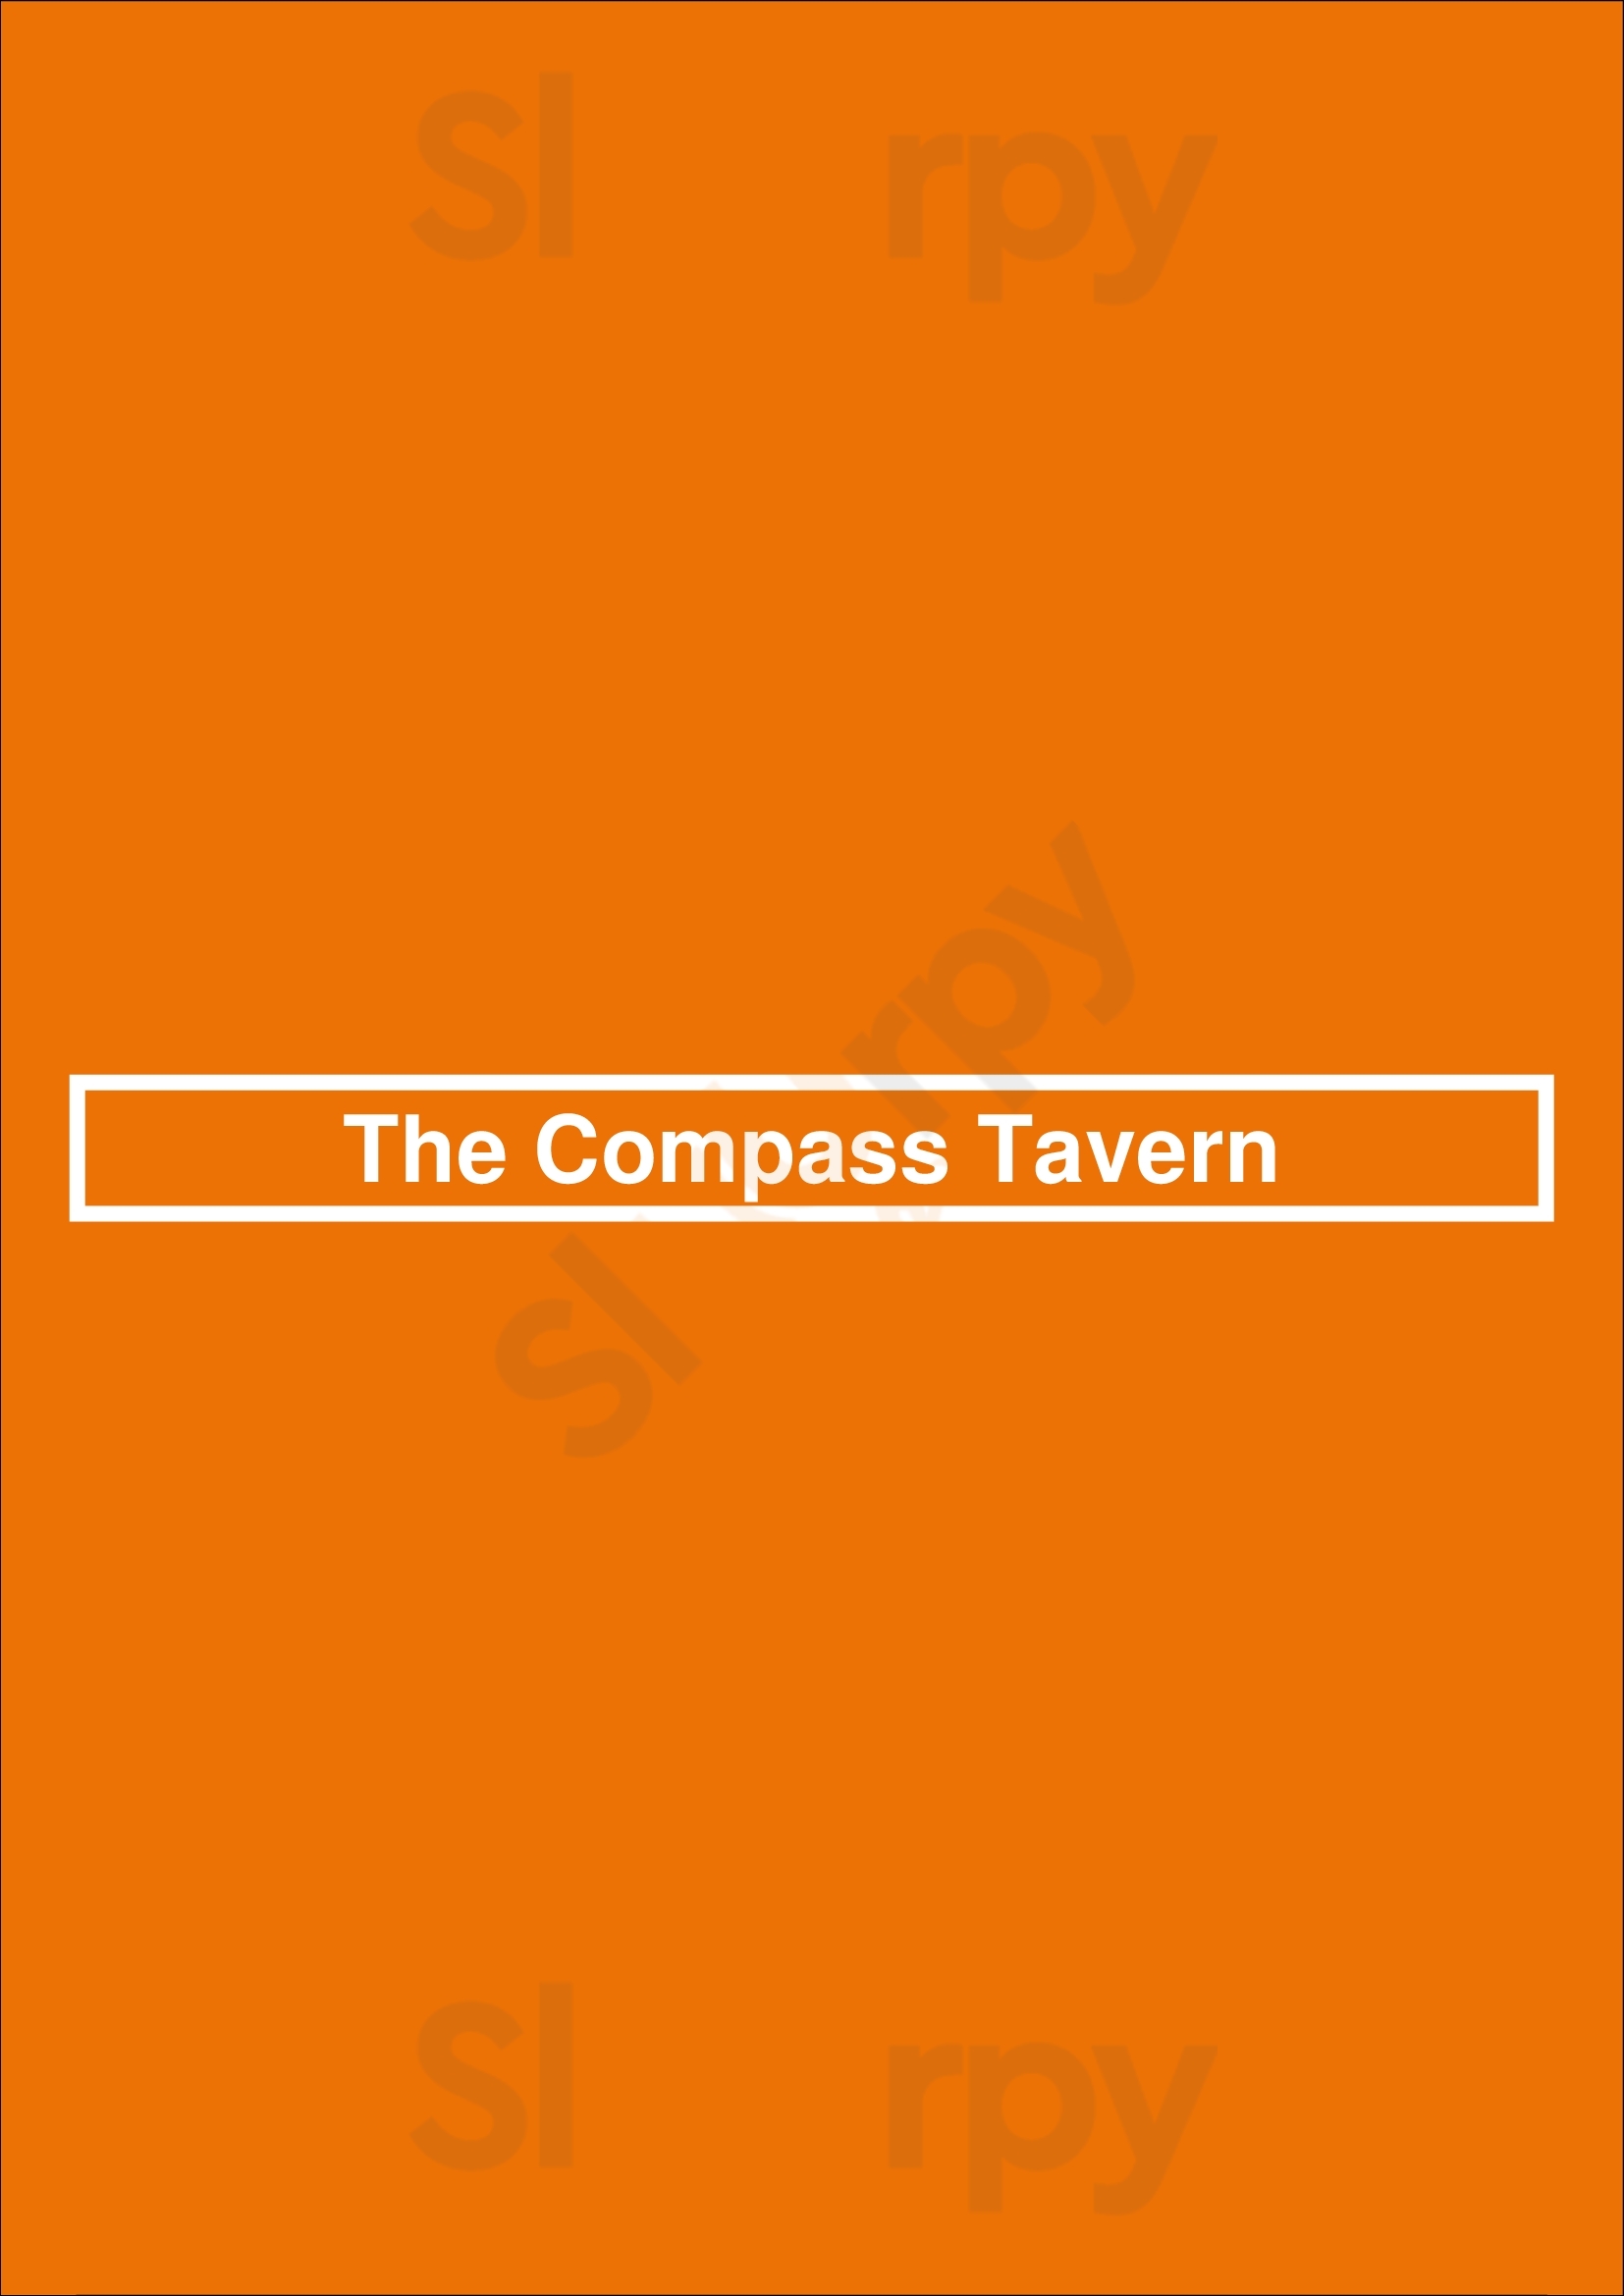 The Compass Tavern Worcester Menu - 1